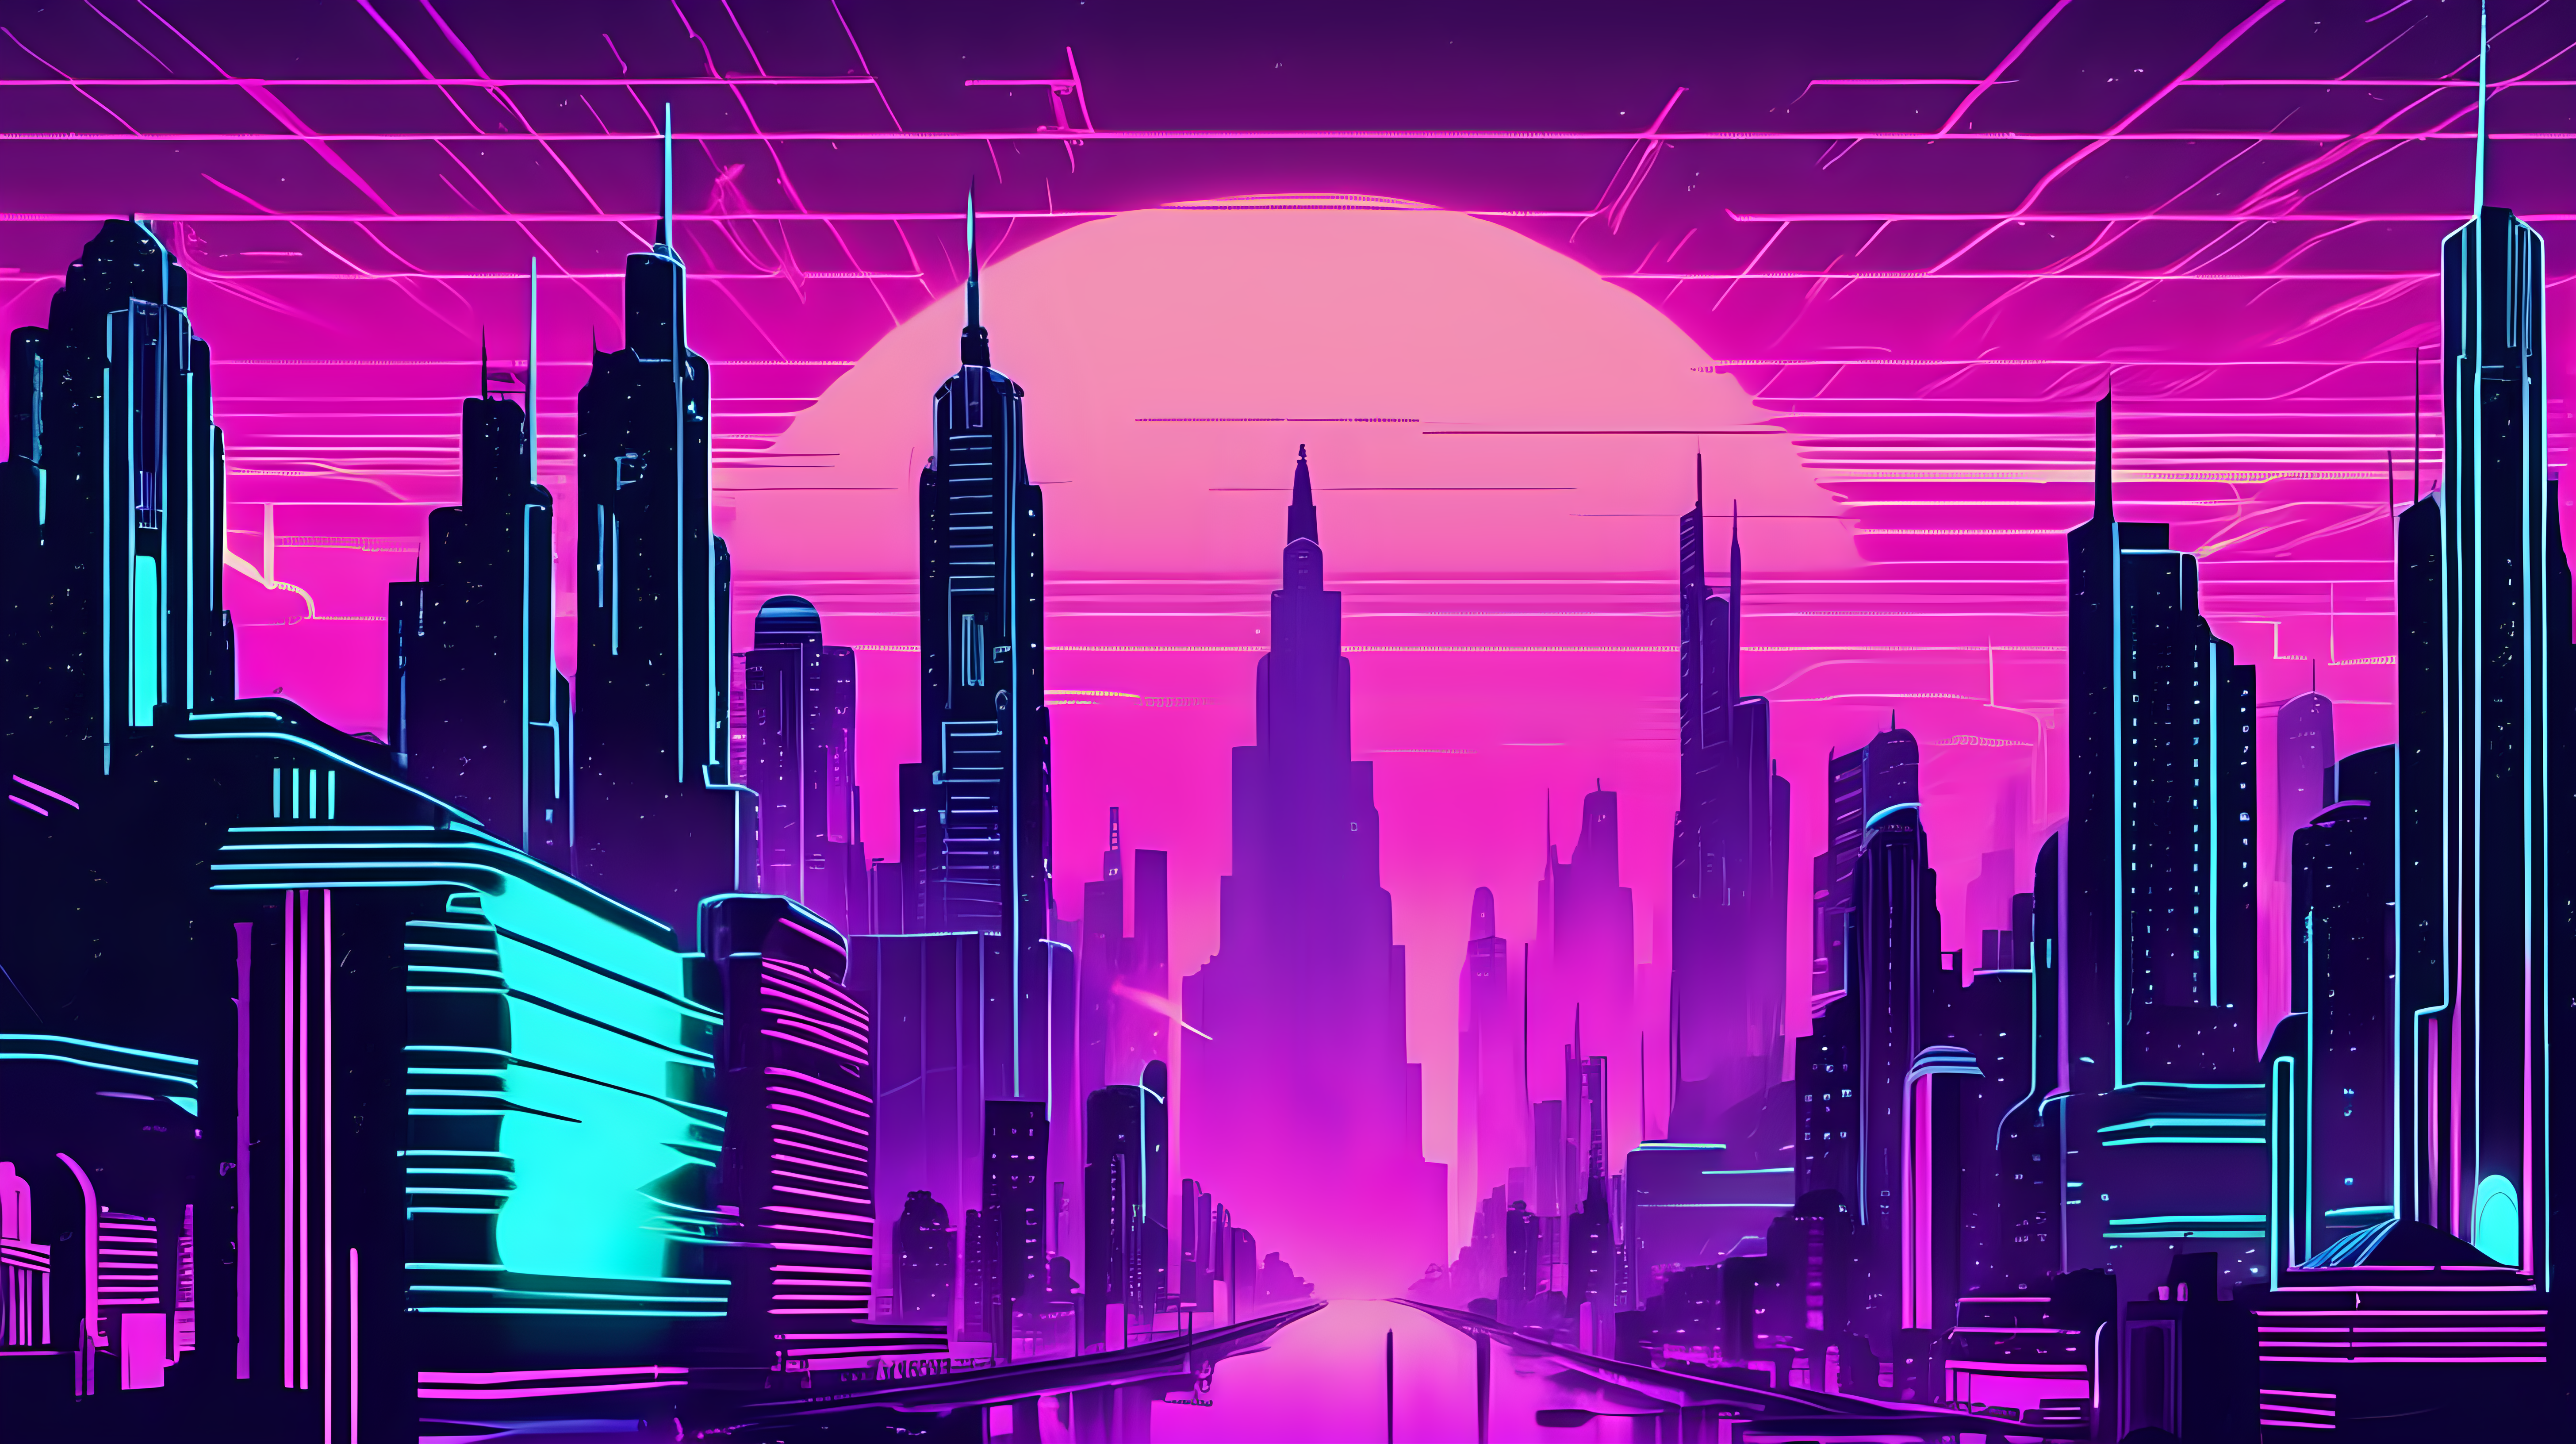 Art deco vaporwave Cyberpunk cityscape